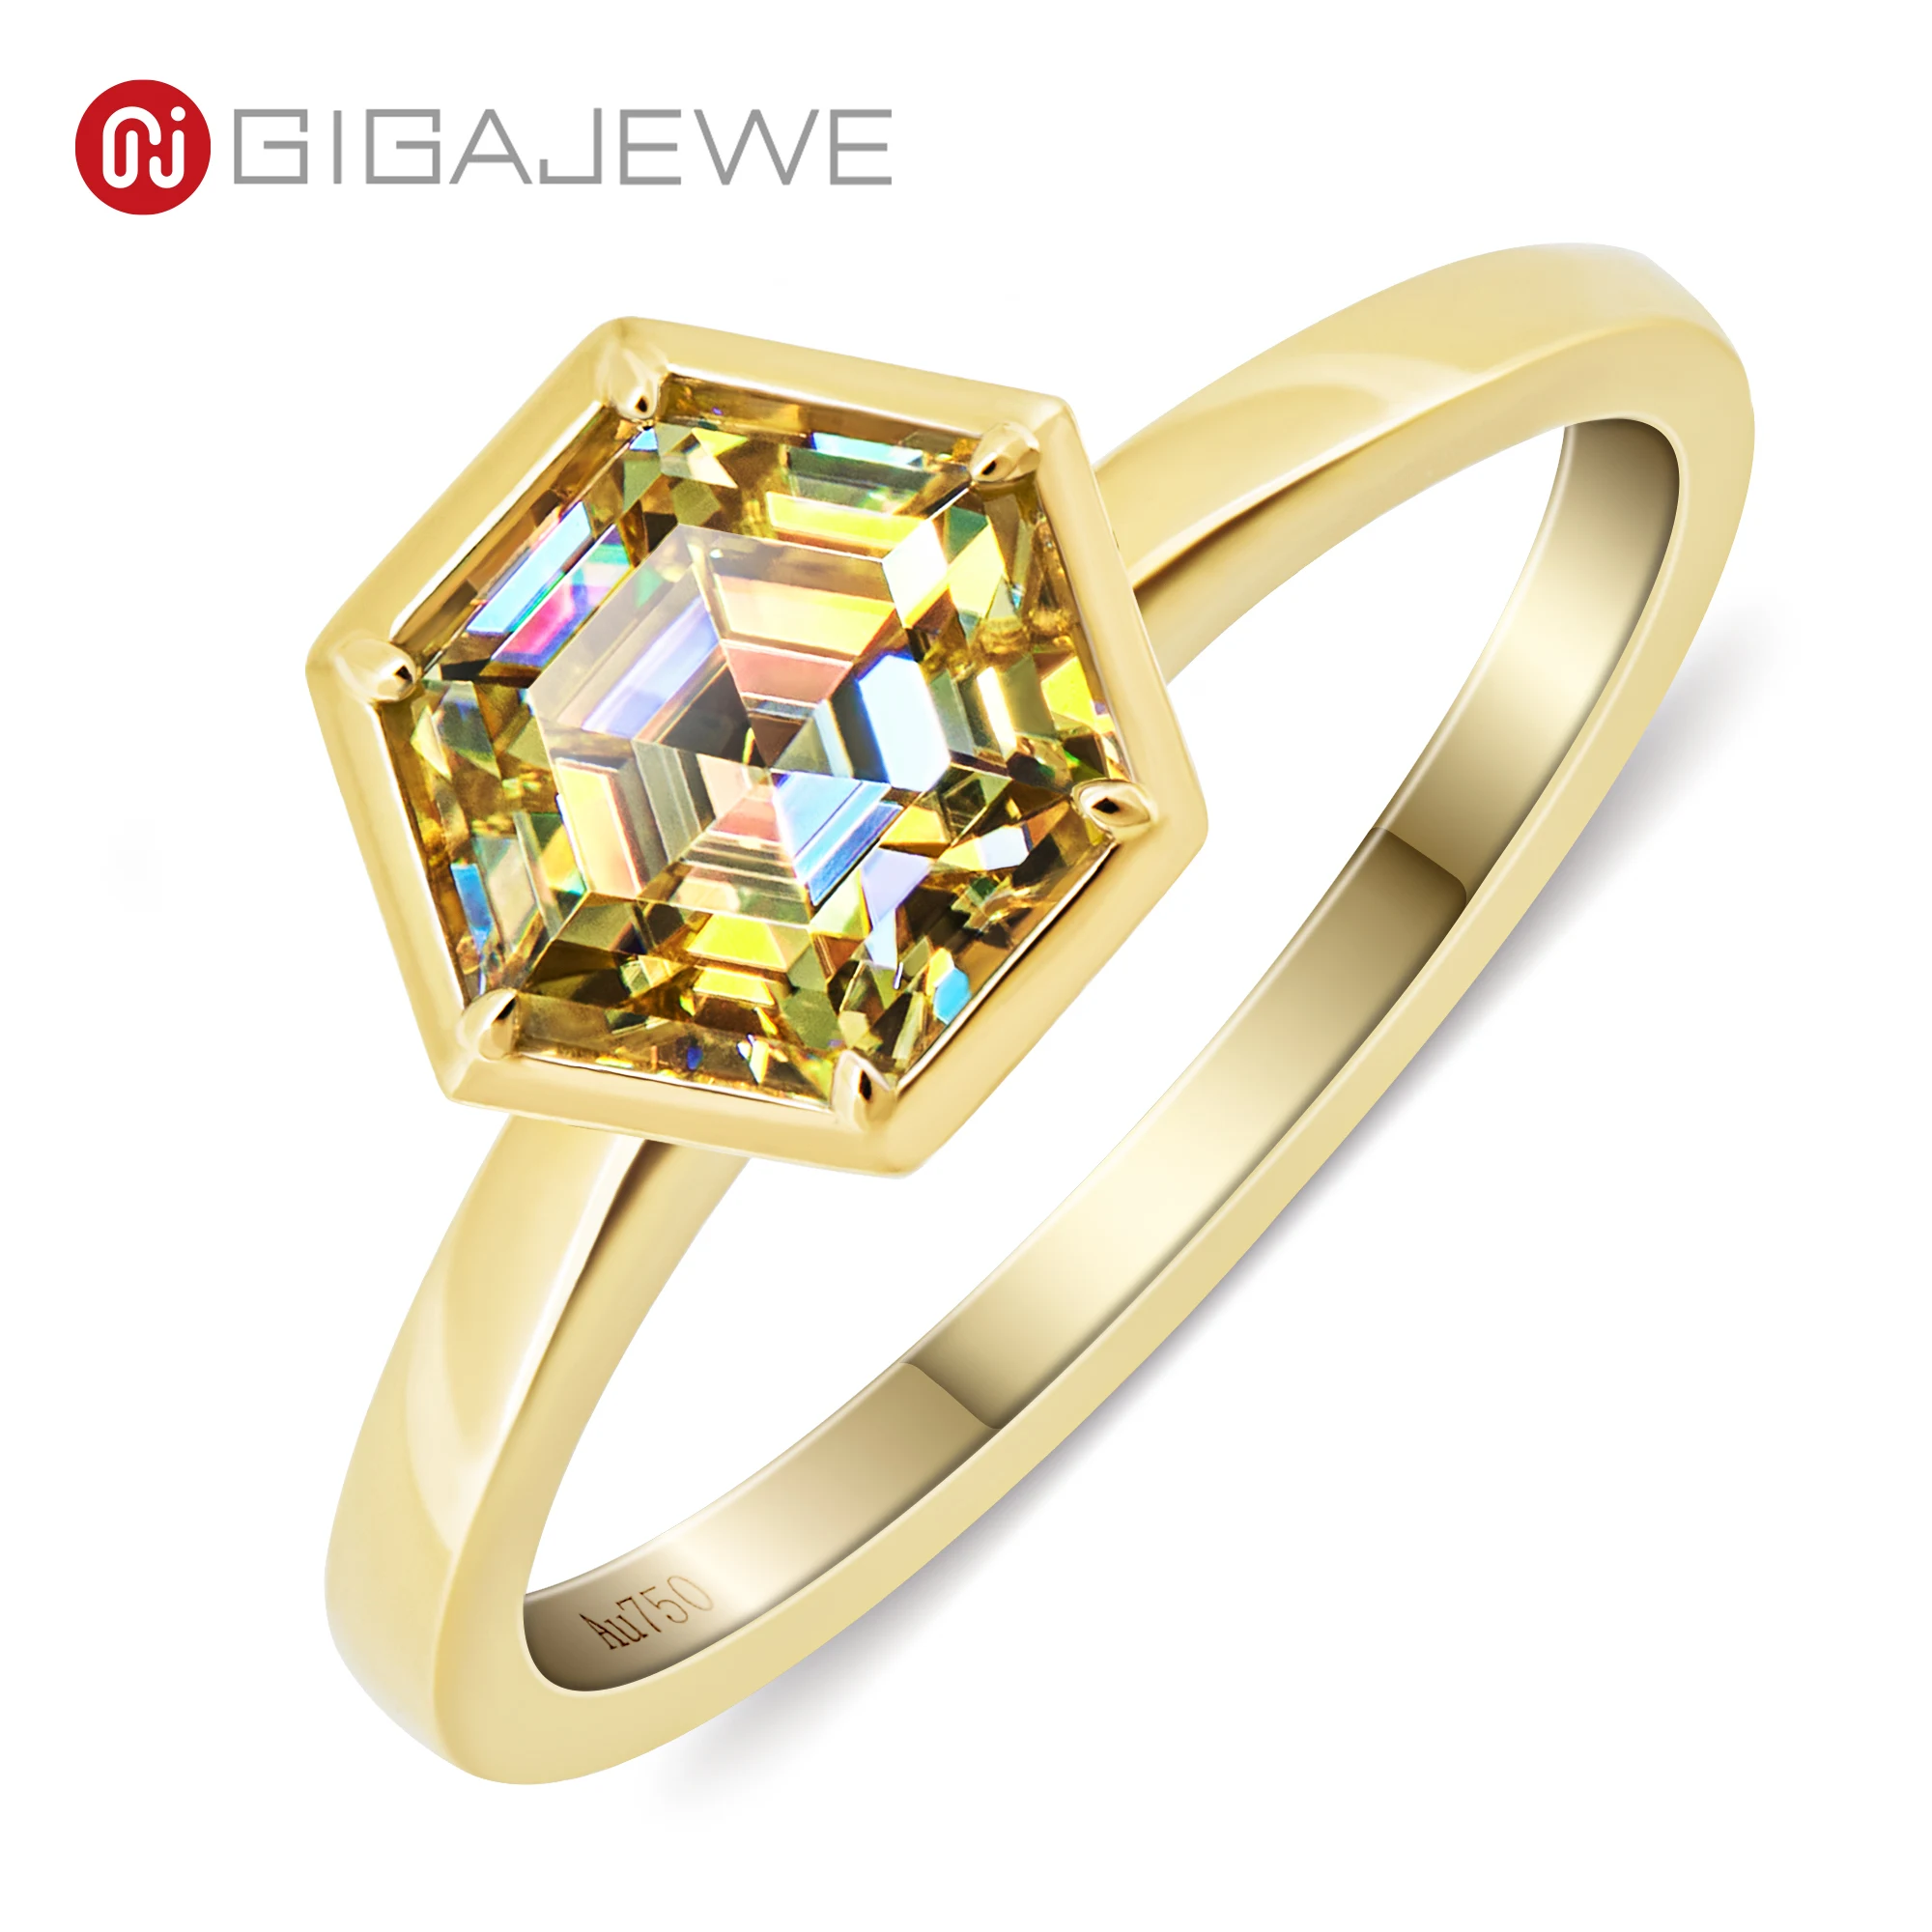 

GIGAJEWE 1ct 6.5mm Vivid yellow/Blue/Green Color Moissanite VVS1 Hexagon Cut 18K White Gold Ring Jewelry Woman Girl Gift